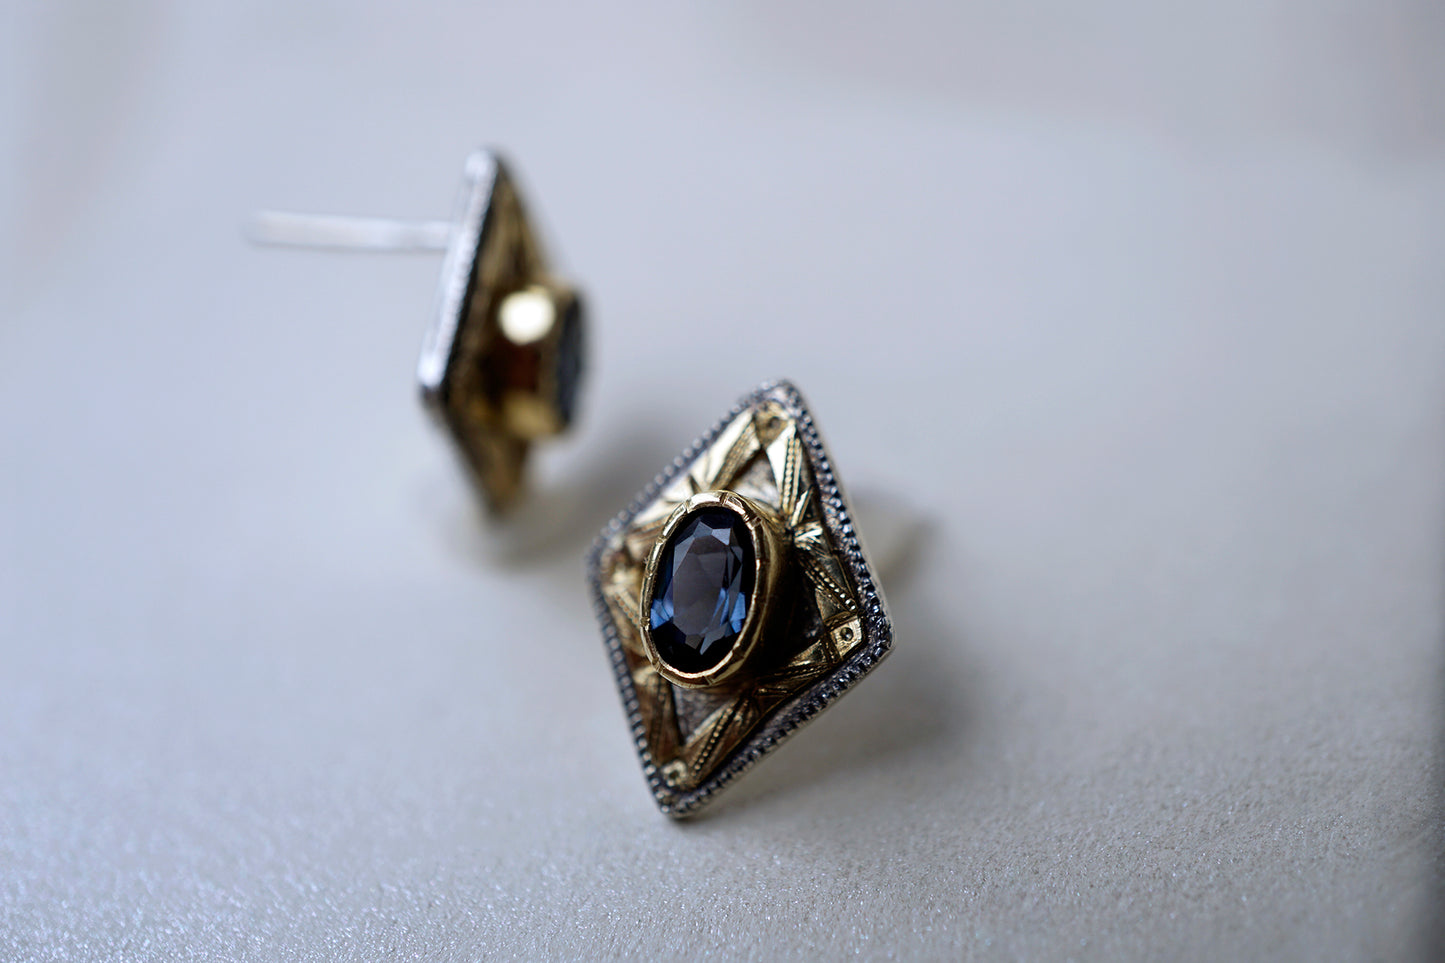 Art Deco Engraved Earrings